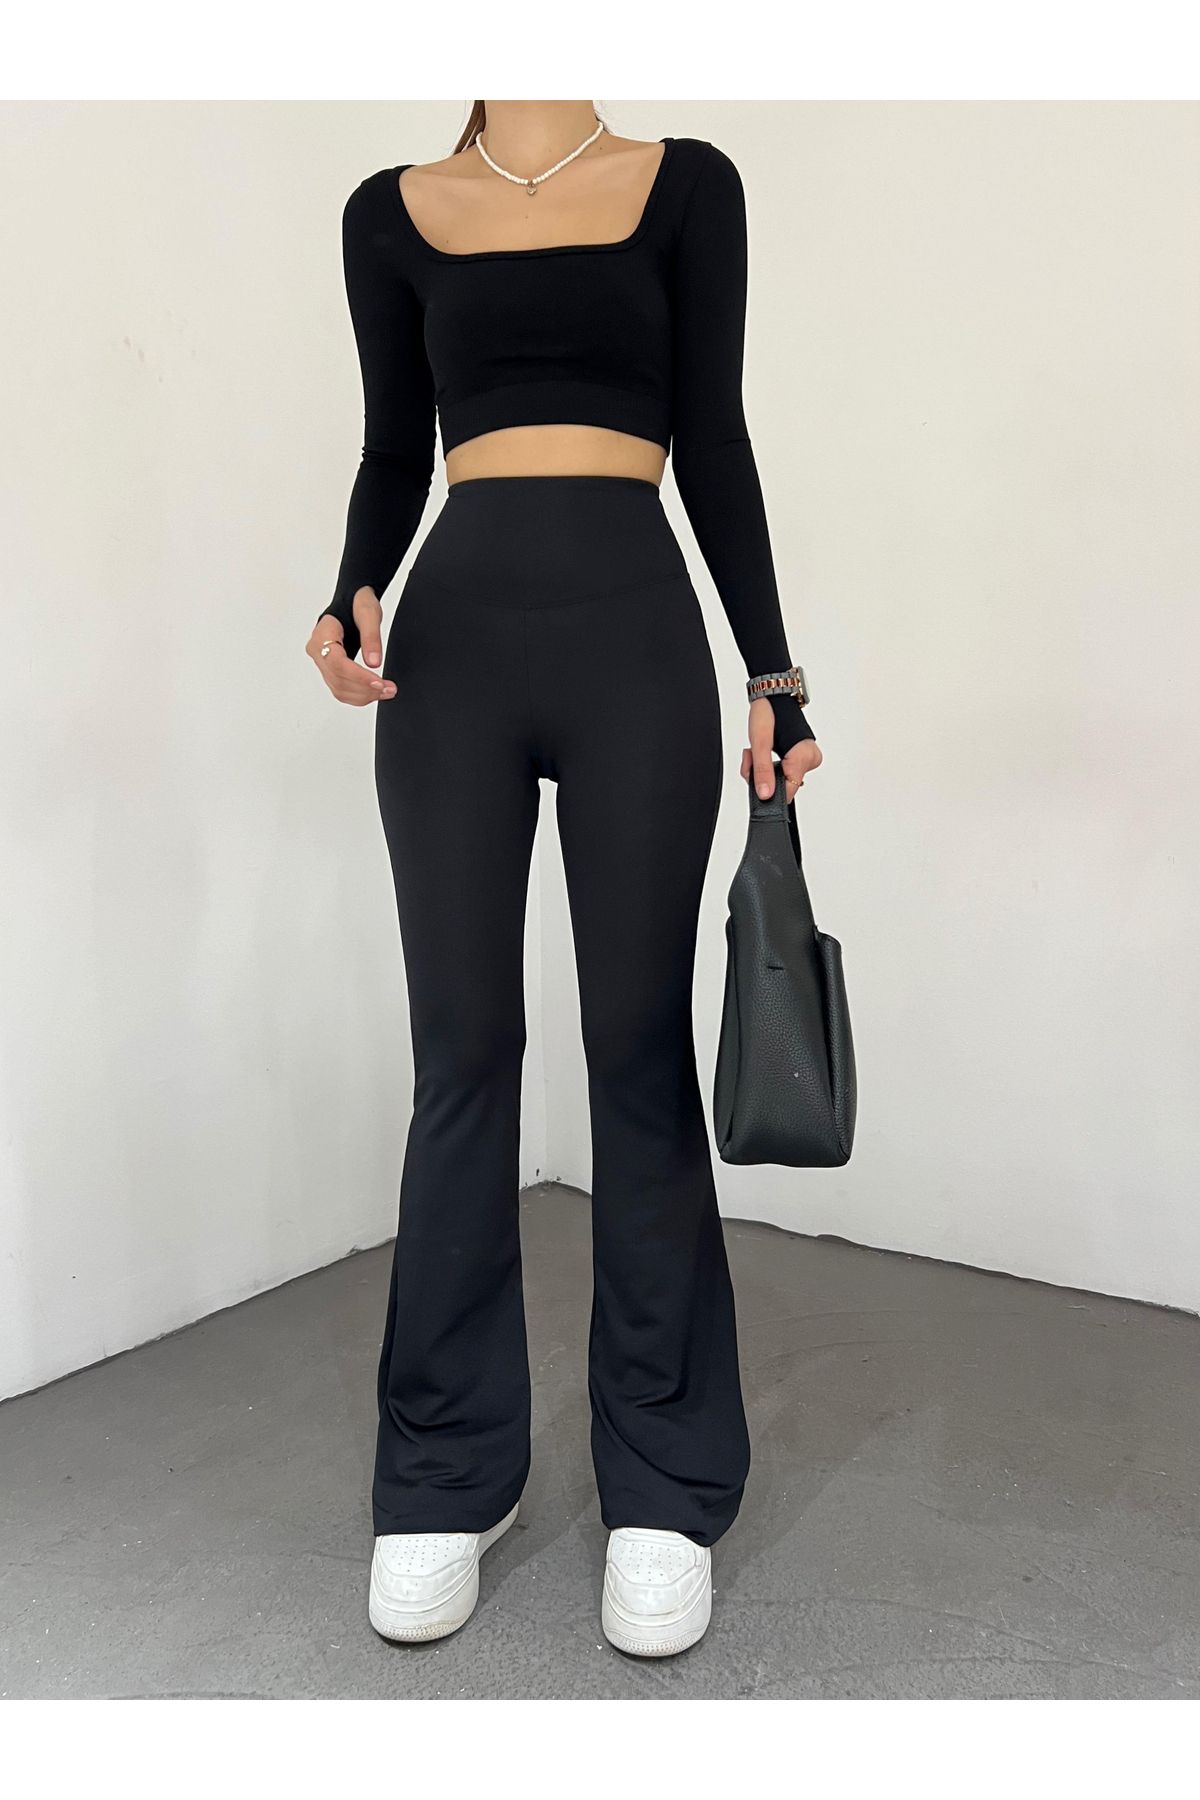 HATCELL Kadın Siyah Full Likralı Toparlayıcı Orijinal Kesim Tayt Pantolon Is-7010